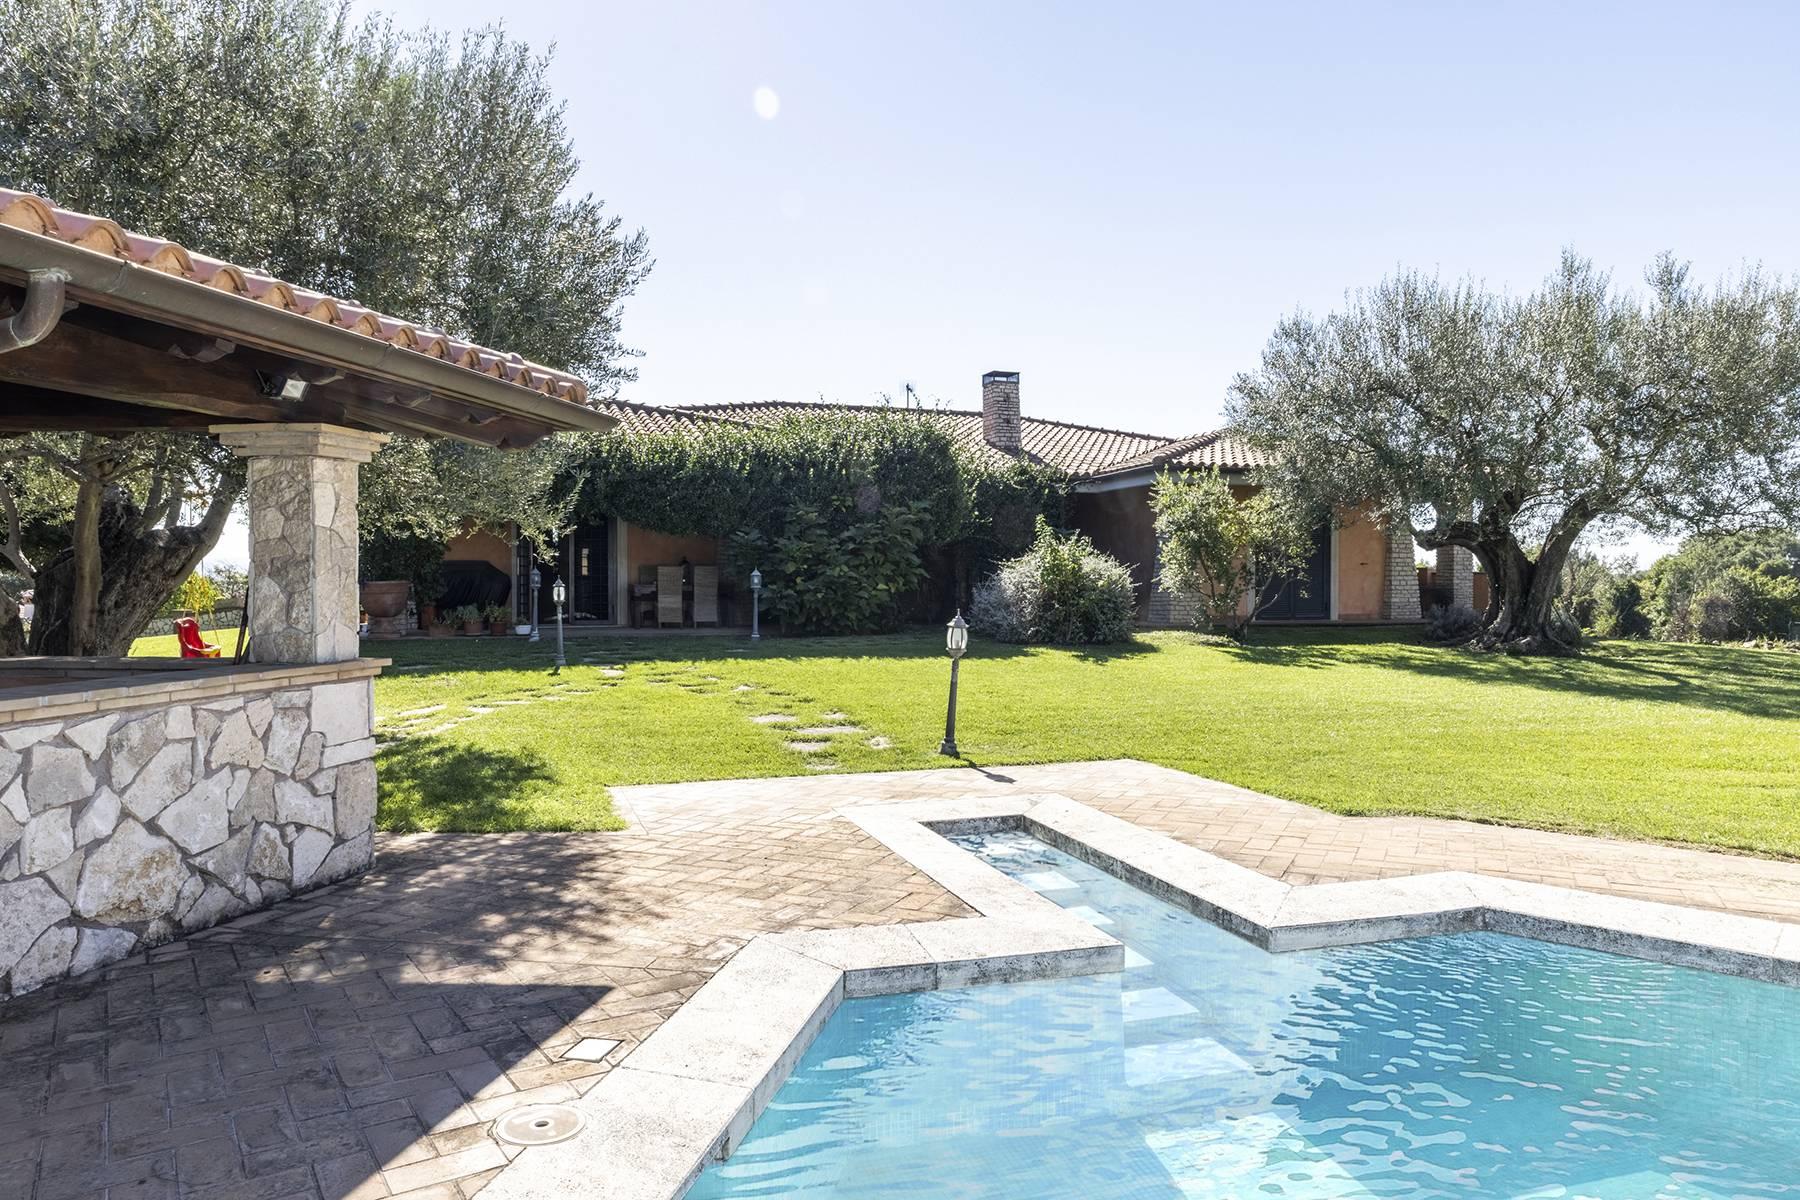 Moderna villa con piscina a due passi da Roma - 11